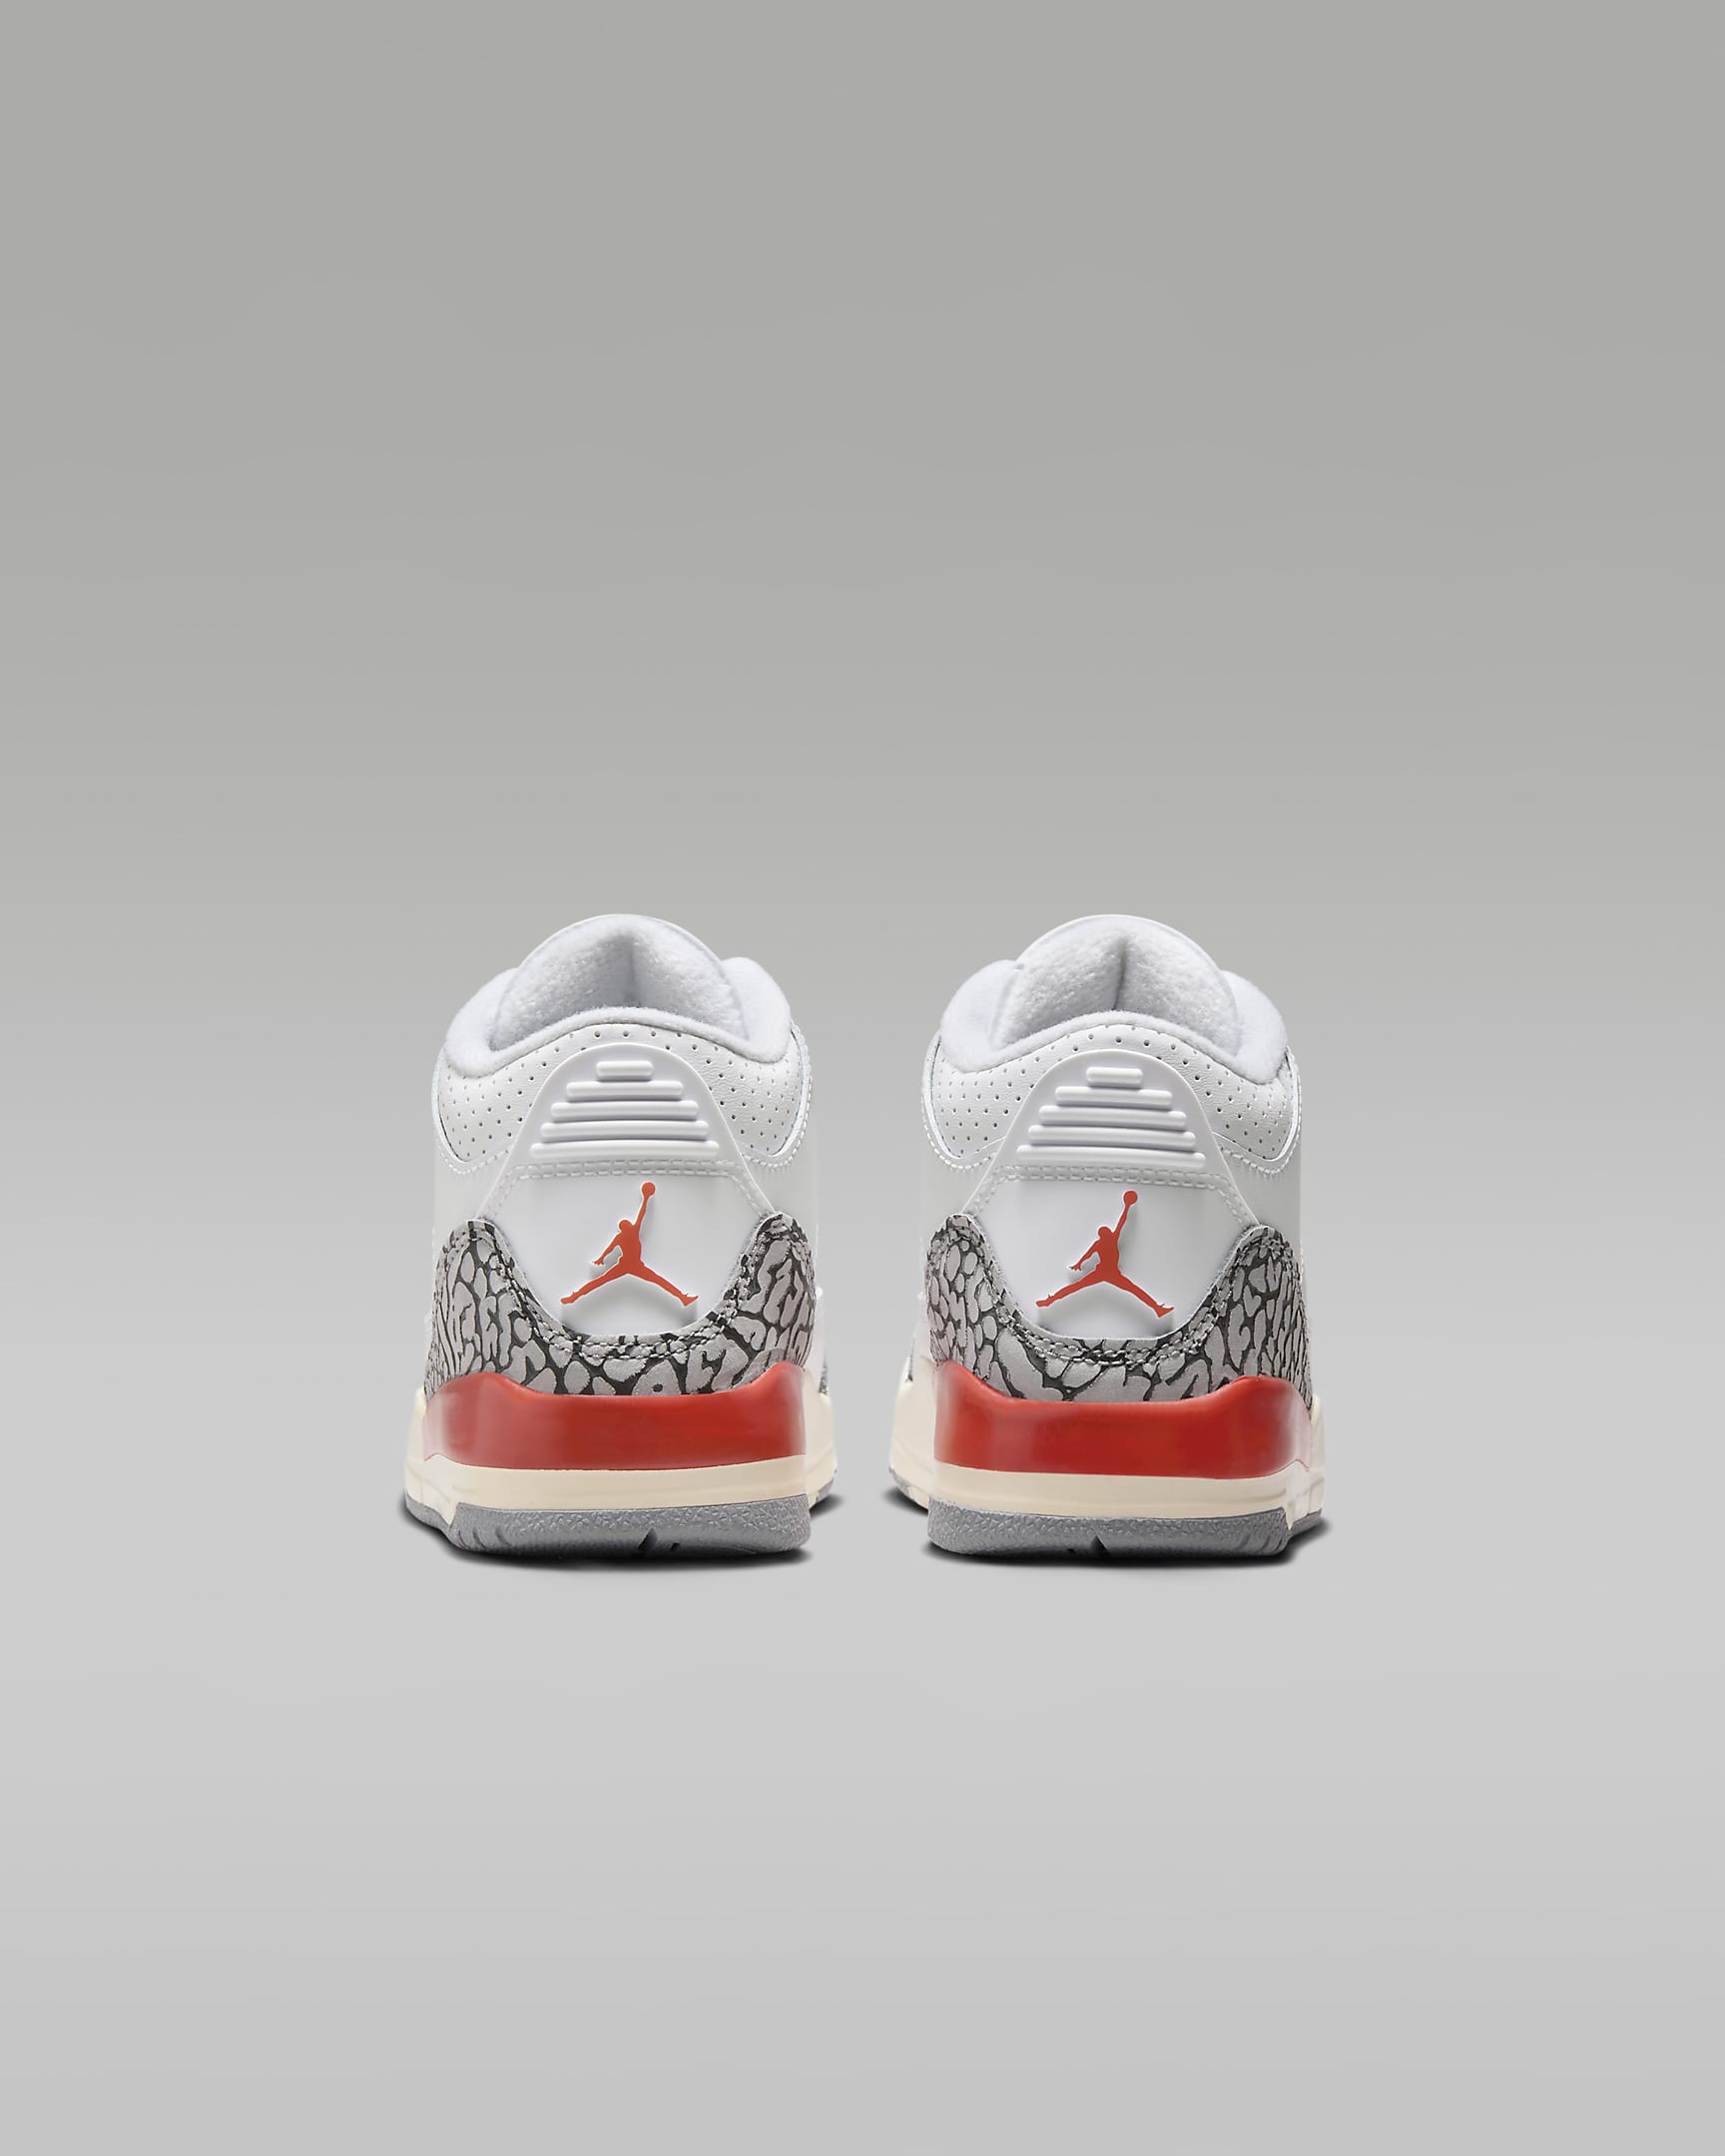 Jordan 3 Retro Little Kids' Shoes - White/Sail/Cement Grey/Cosmic Clay